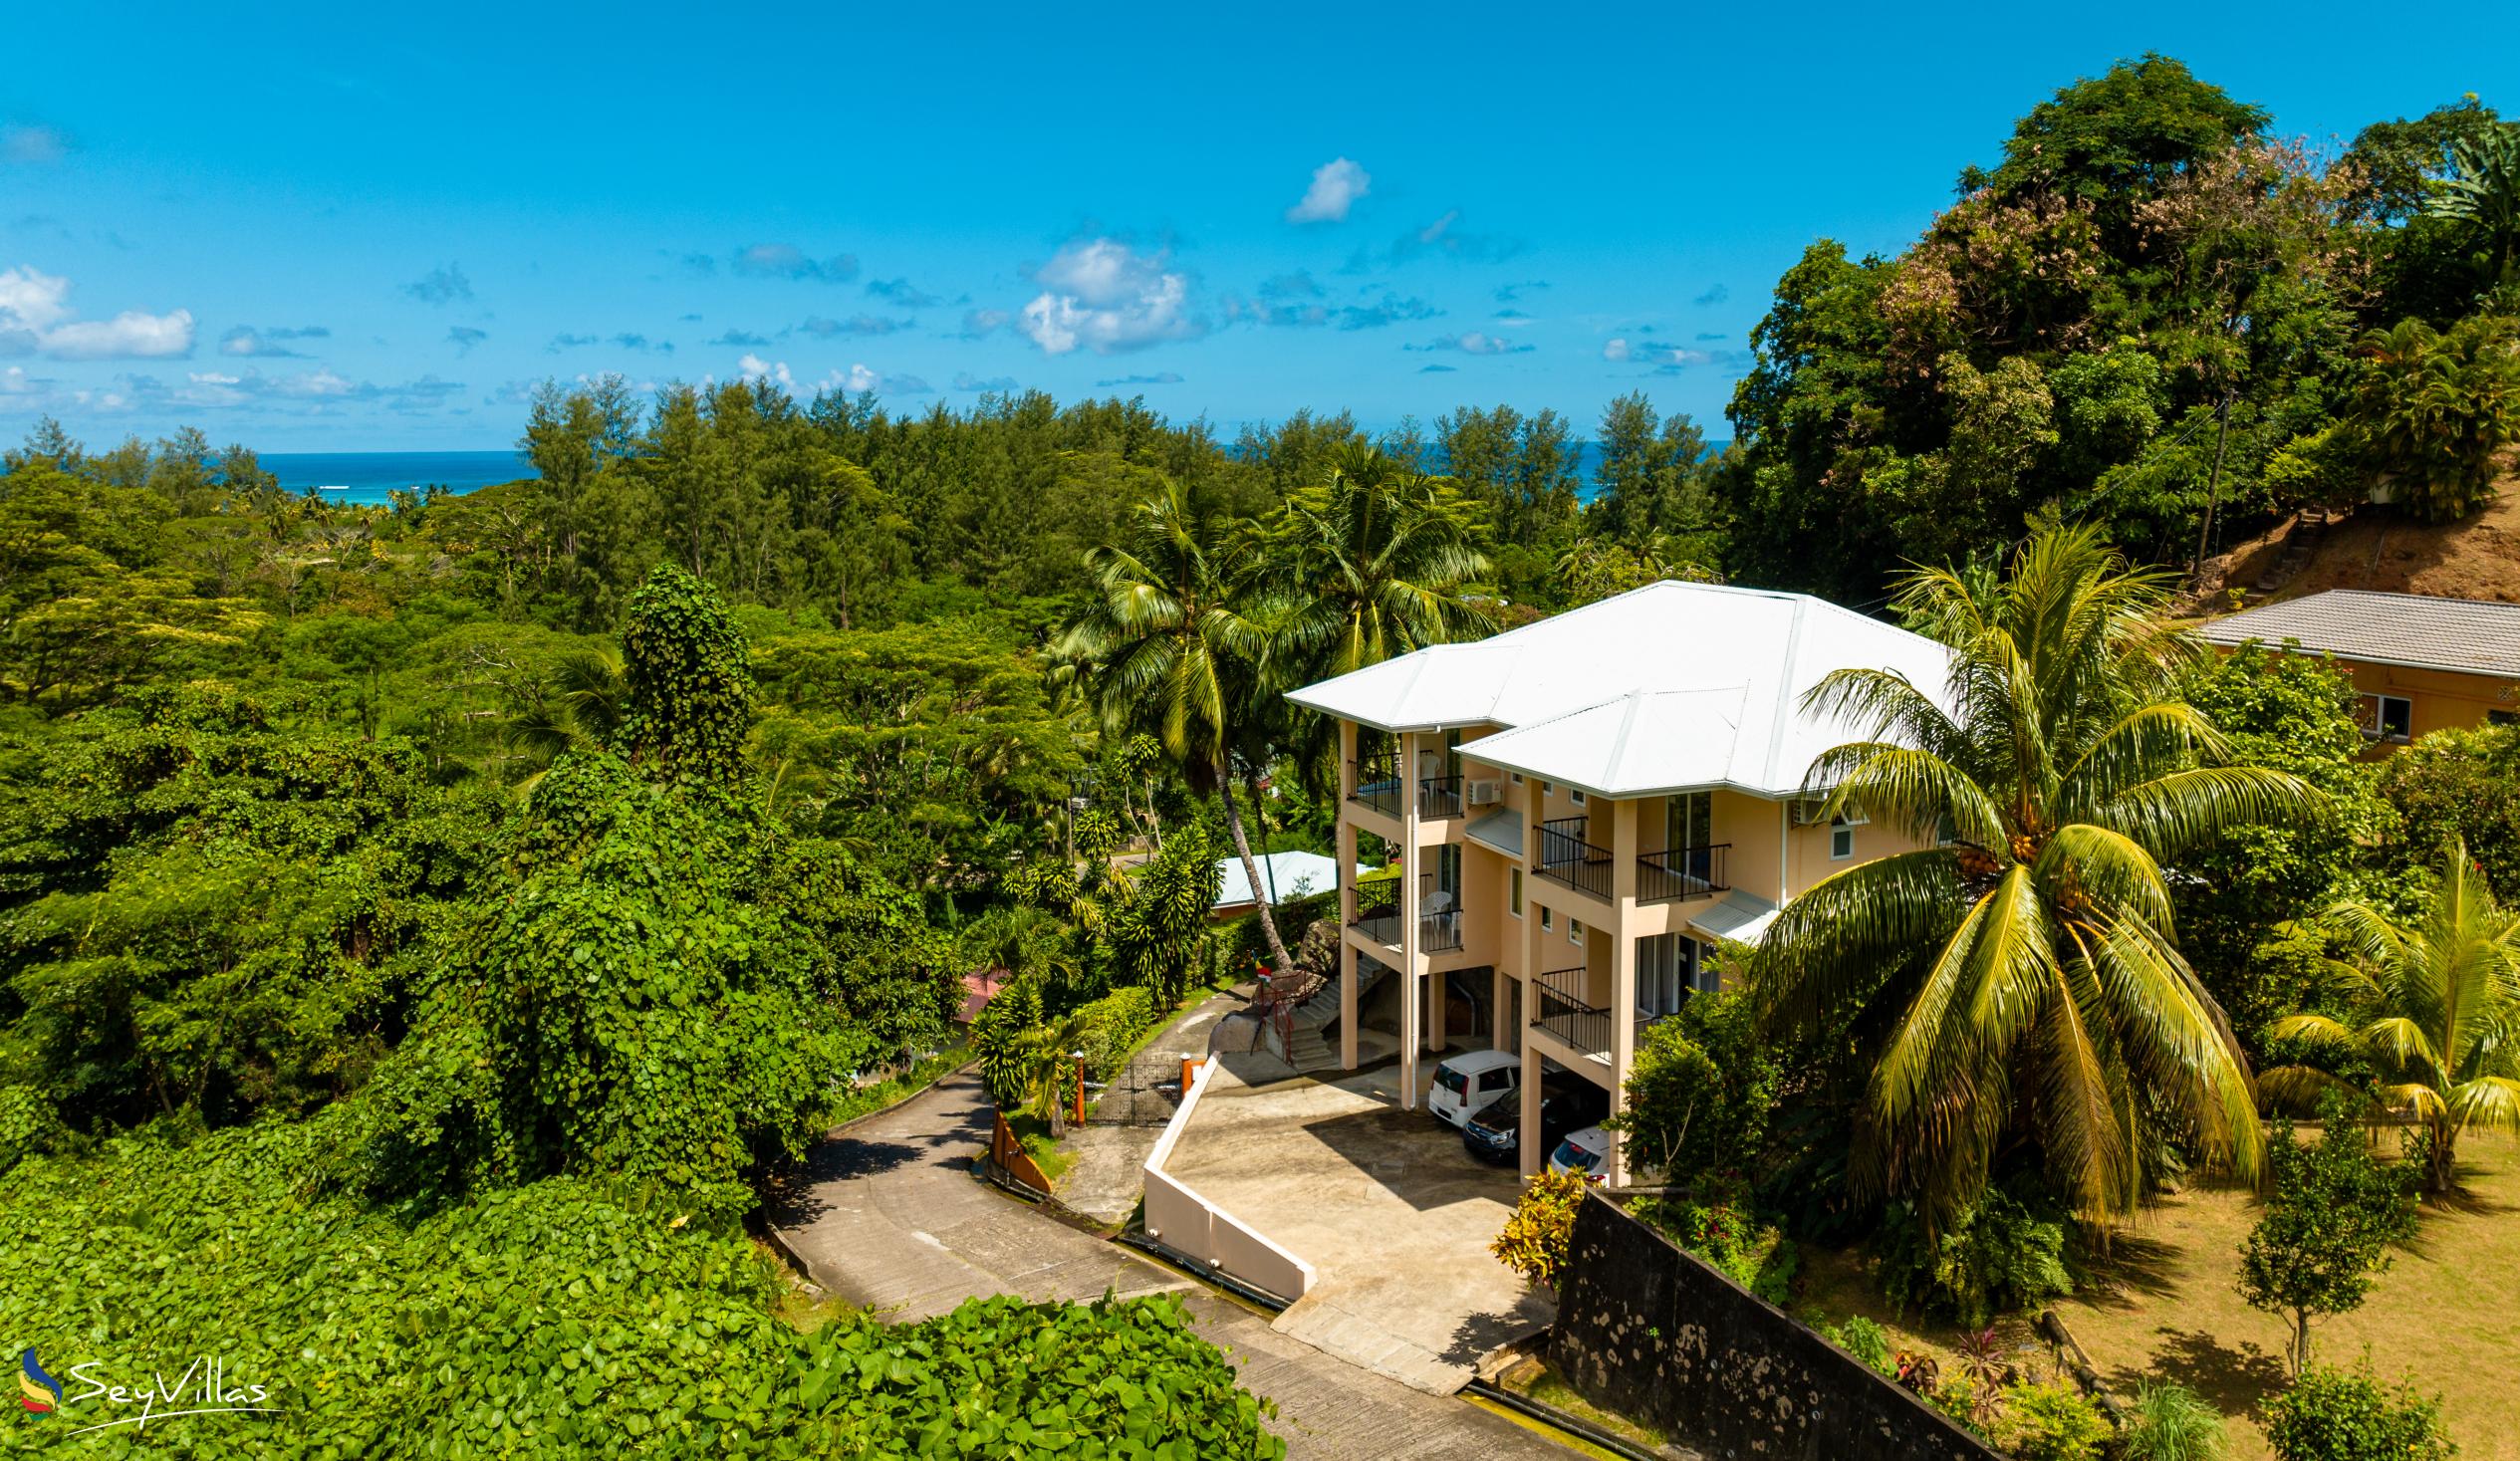 Foto 2: JAIDSS Holiday Apartments - Aussenbereich - Mahé (Seychellen)